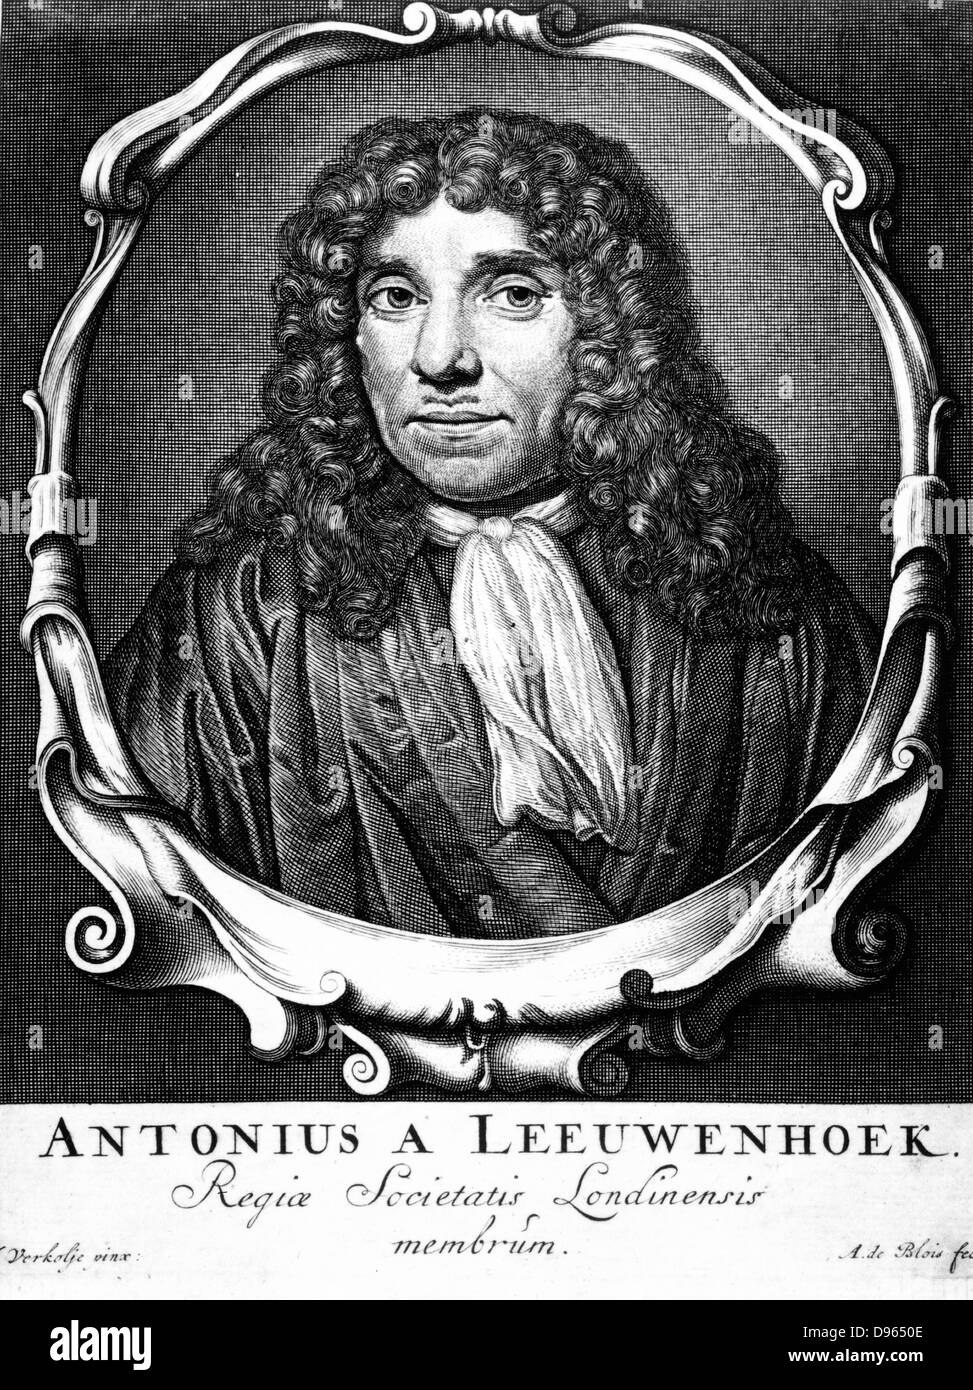 Anton von Leeuwenhoek (1632-1723). Dutch microscopist. Portrait engraving from his 'Arcana naturae detecta', Delft, 1723. Stock Photo